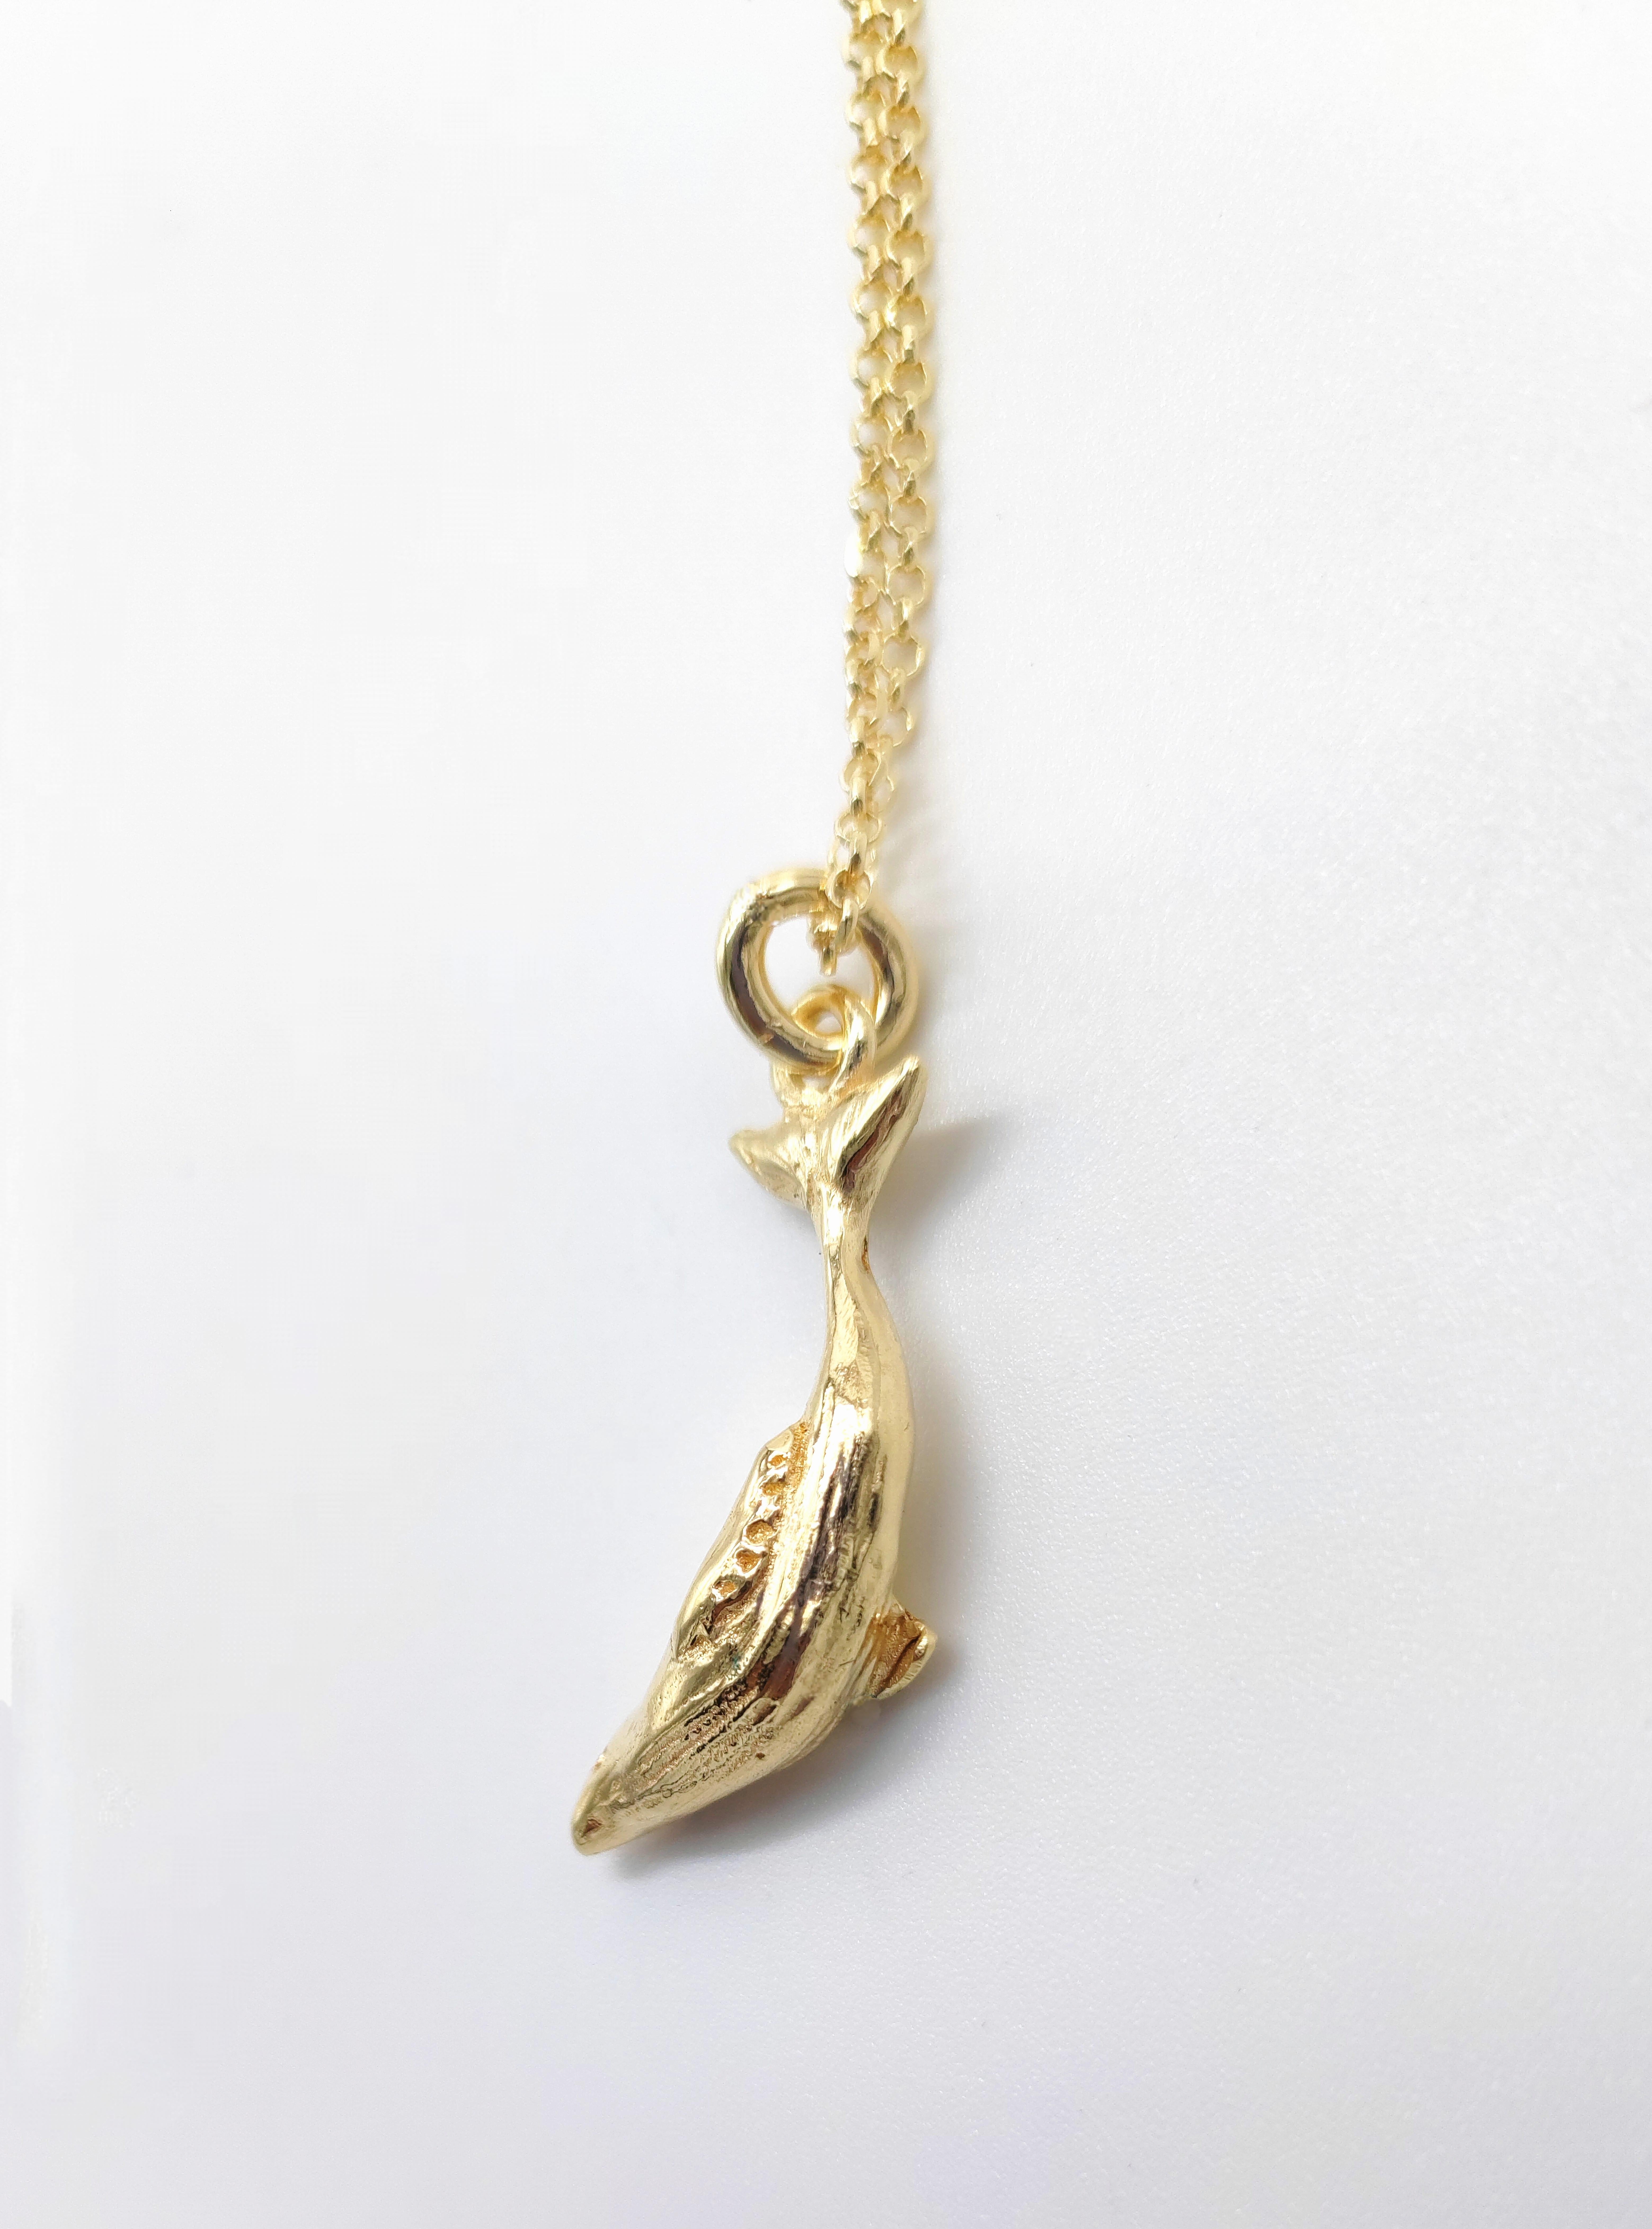 Brilliant Cut 14 Karat Gold and Brillants Necklace with Whale Pendant For Sale